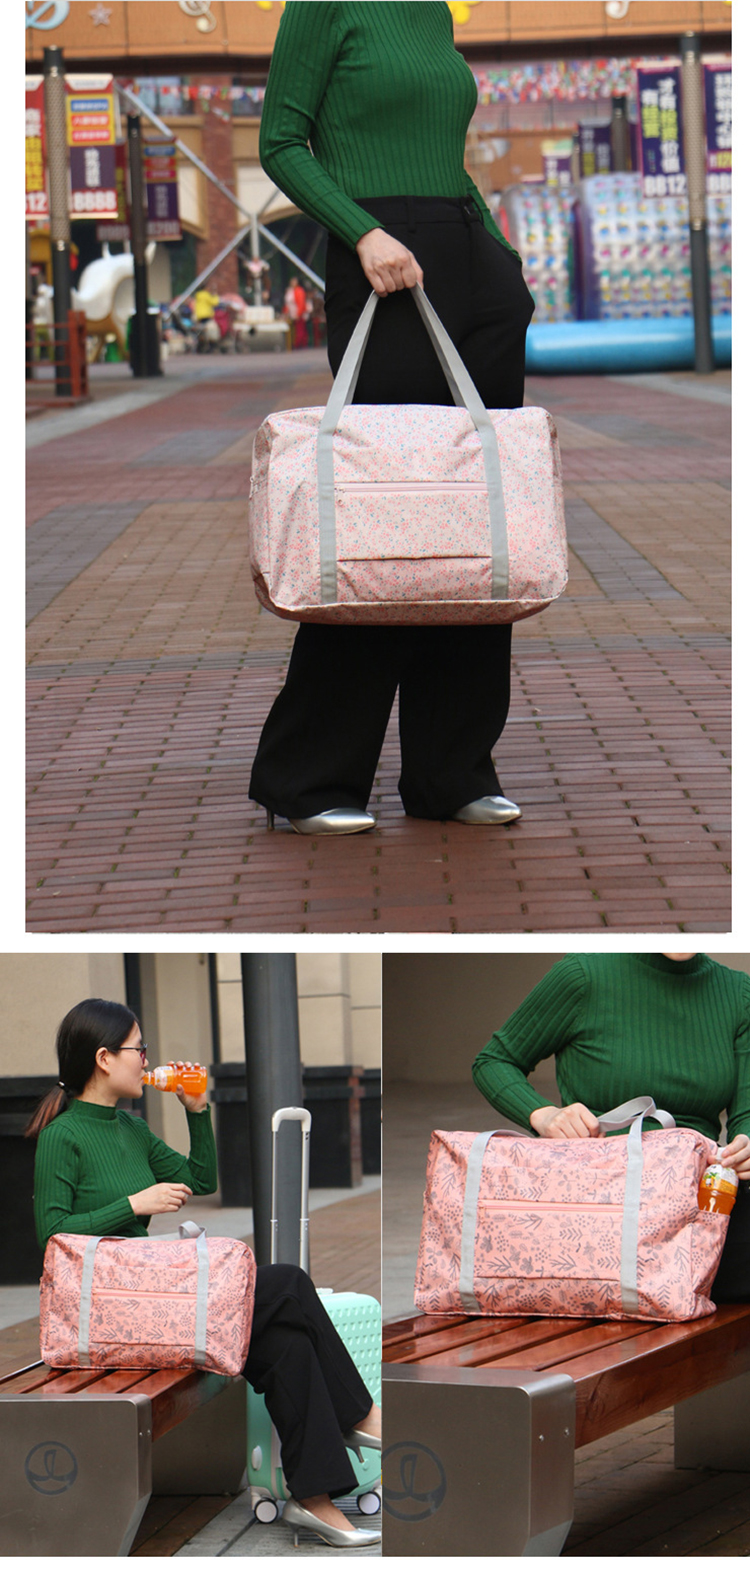 Honana-HN-TB7-Fashion-Waterproof-Luggage-Bag-Travel-Storage-Bag-Large-Organizer-1127507-2